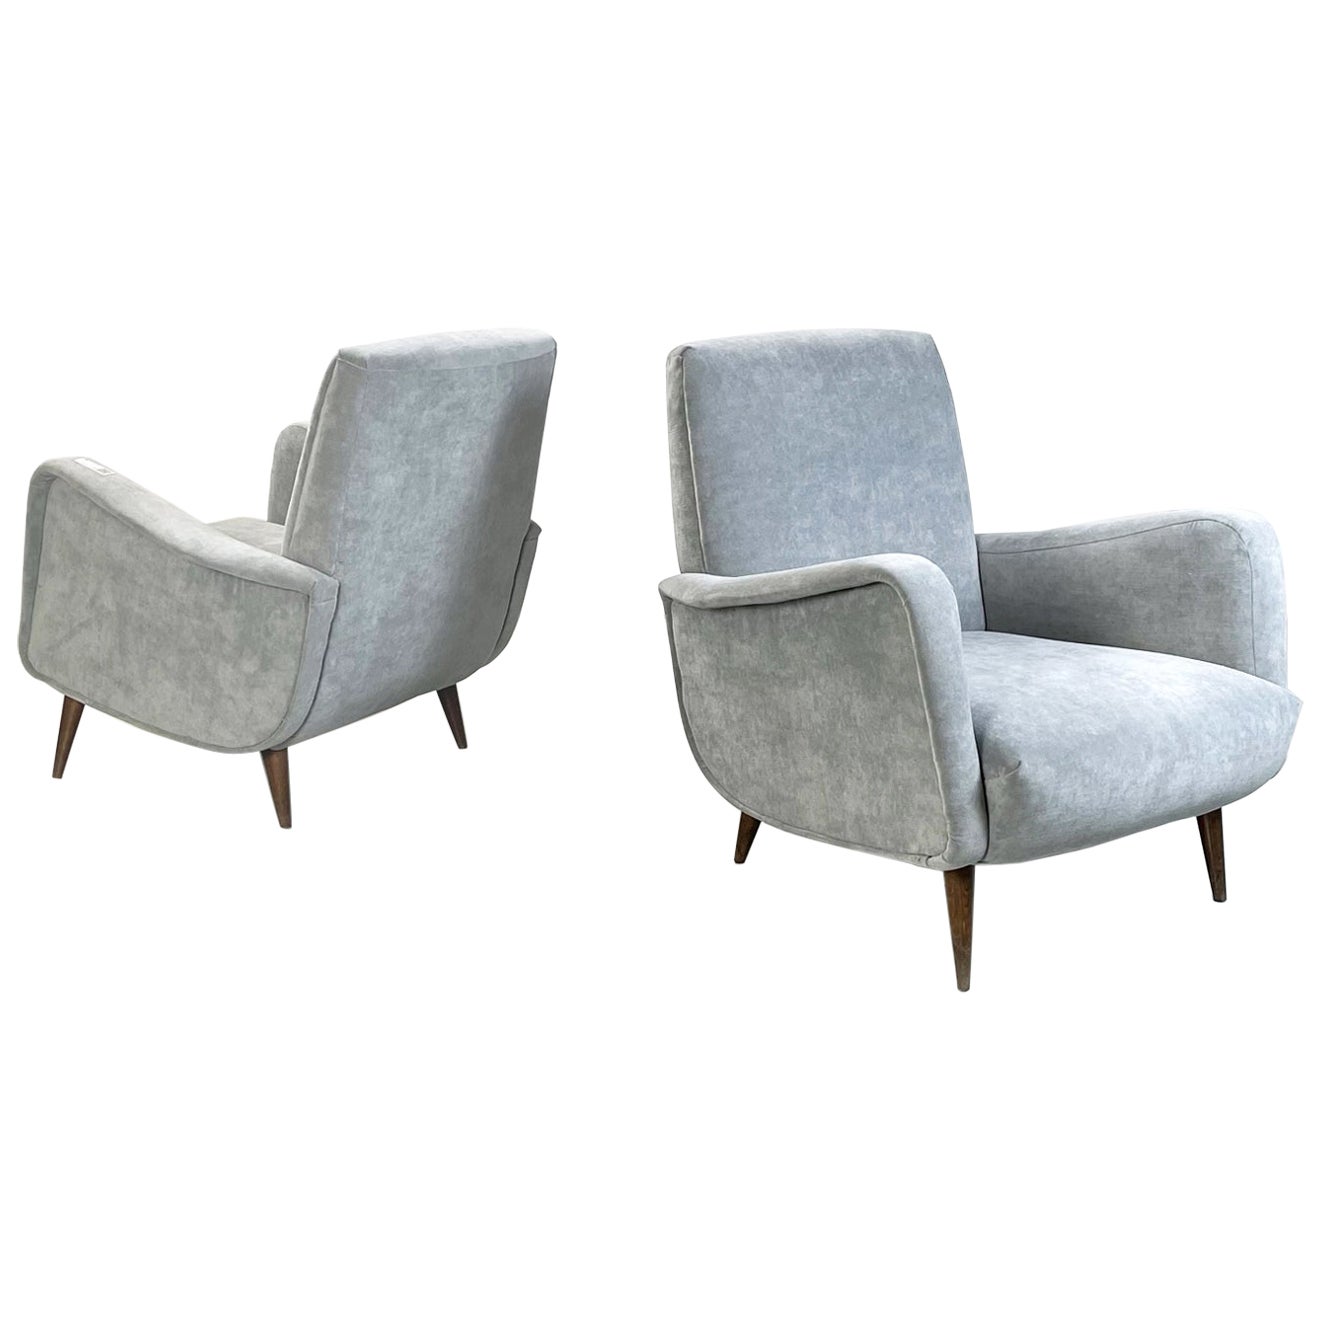 Italian Mid-Century Modern Armchairs in Light Gray Velvet and Wood, 1960s For Sale